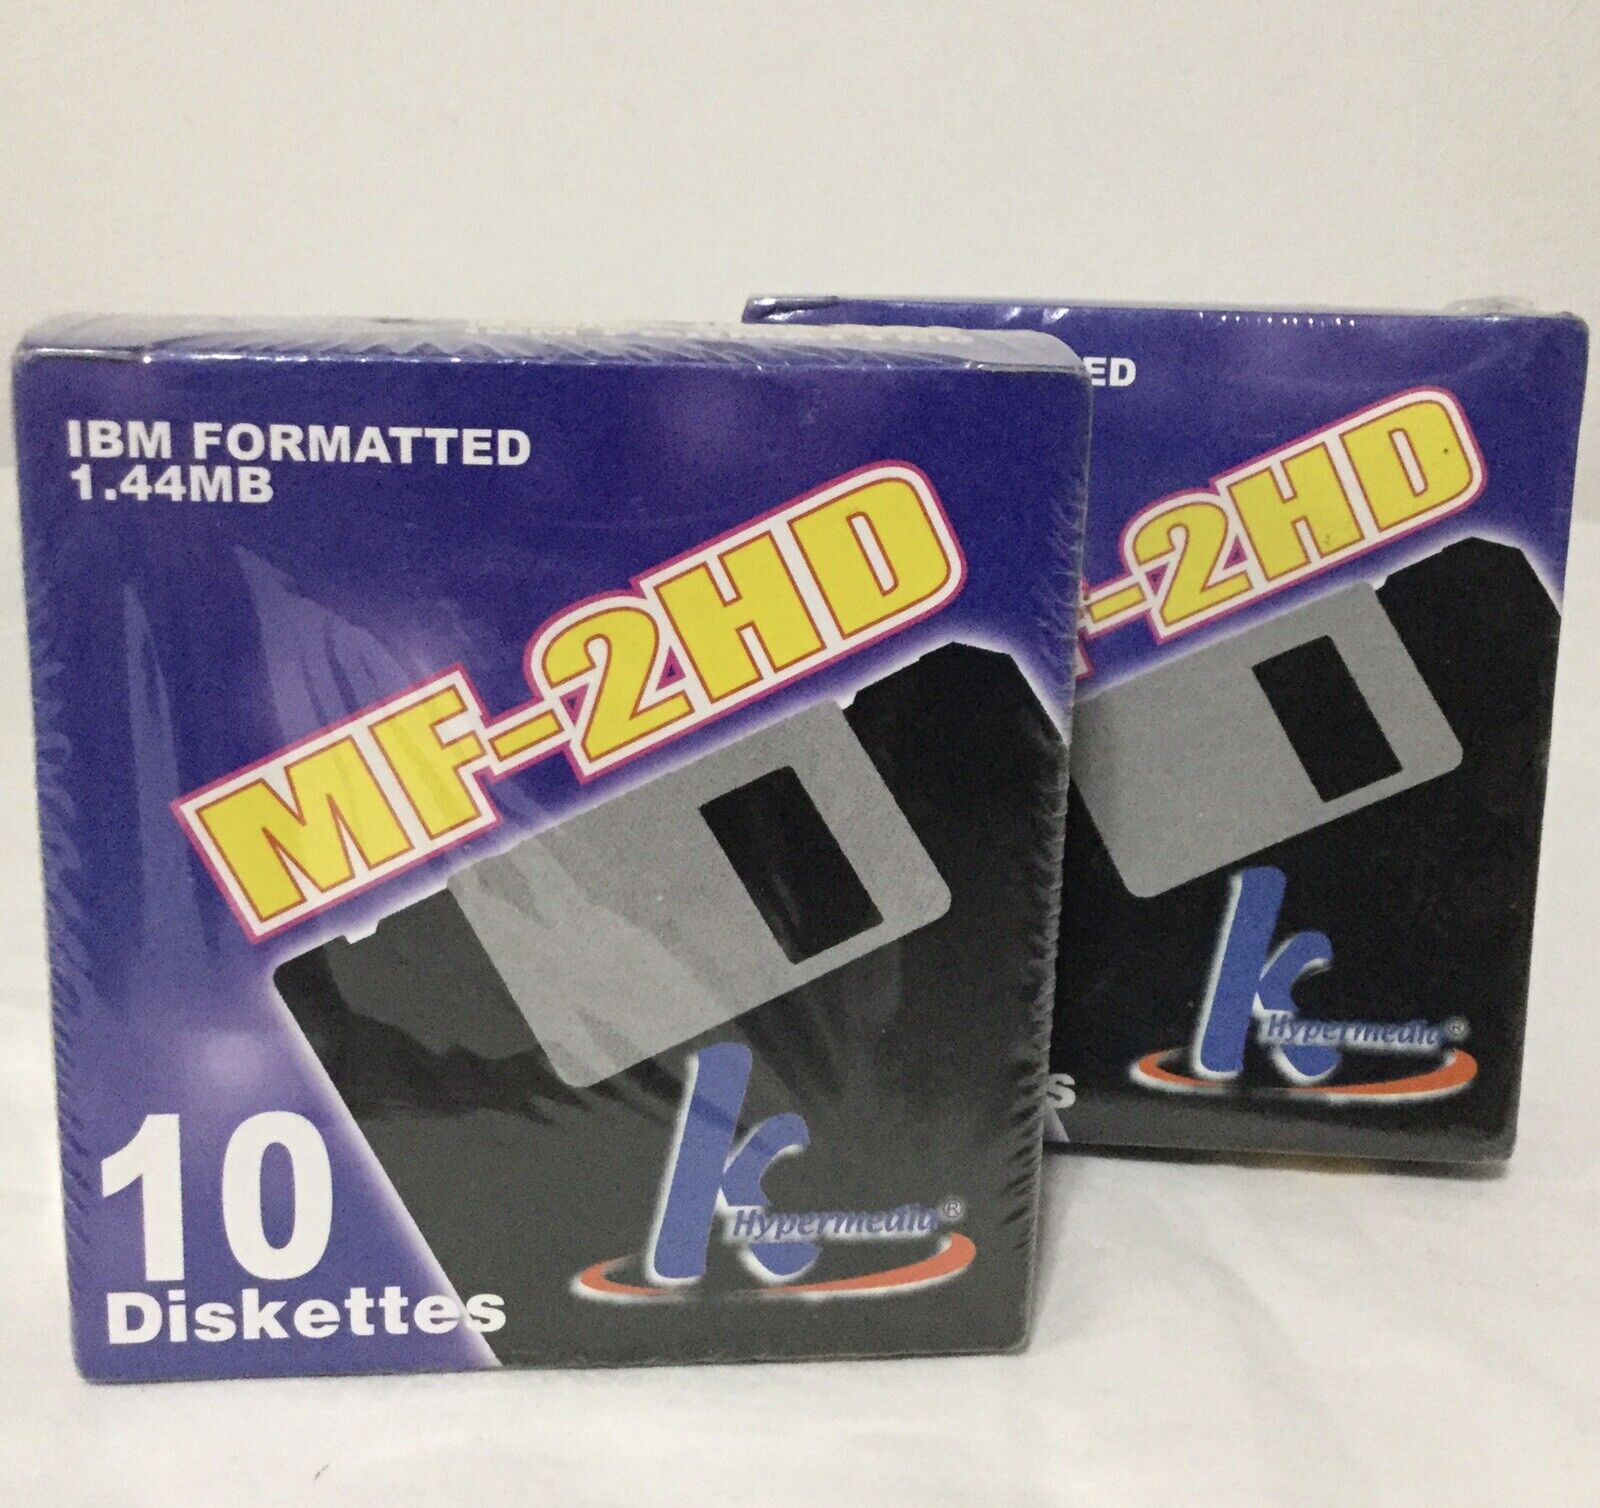 20 KHYPERMEDIA MF-2HD 3.5” Floppy Disk IBM Diskettes 10 Disks EA Lot of 2 Packs